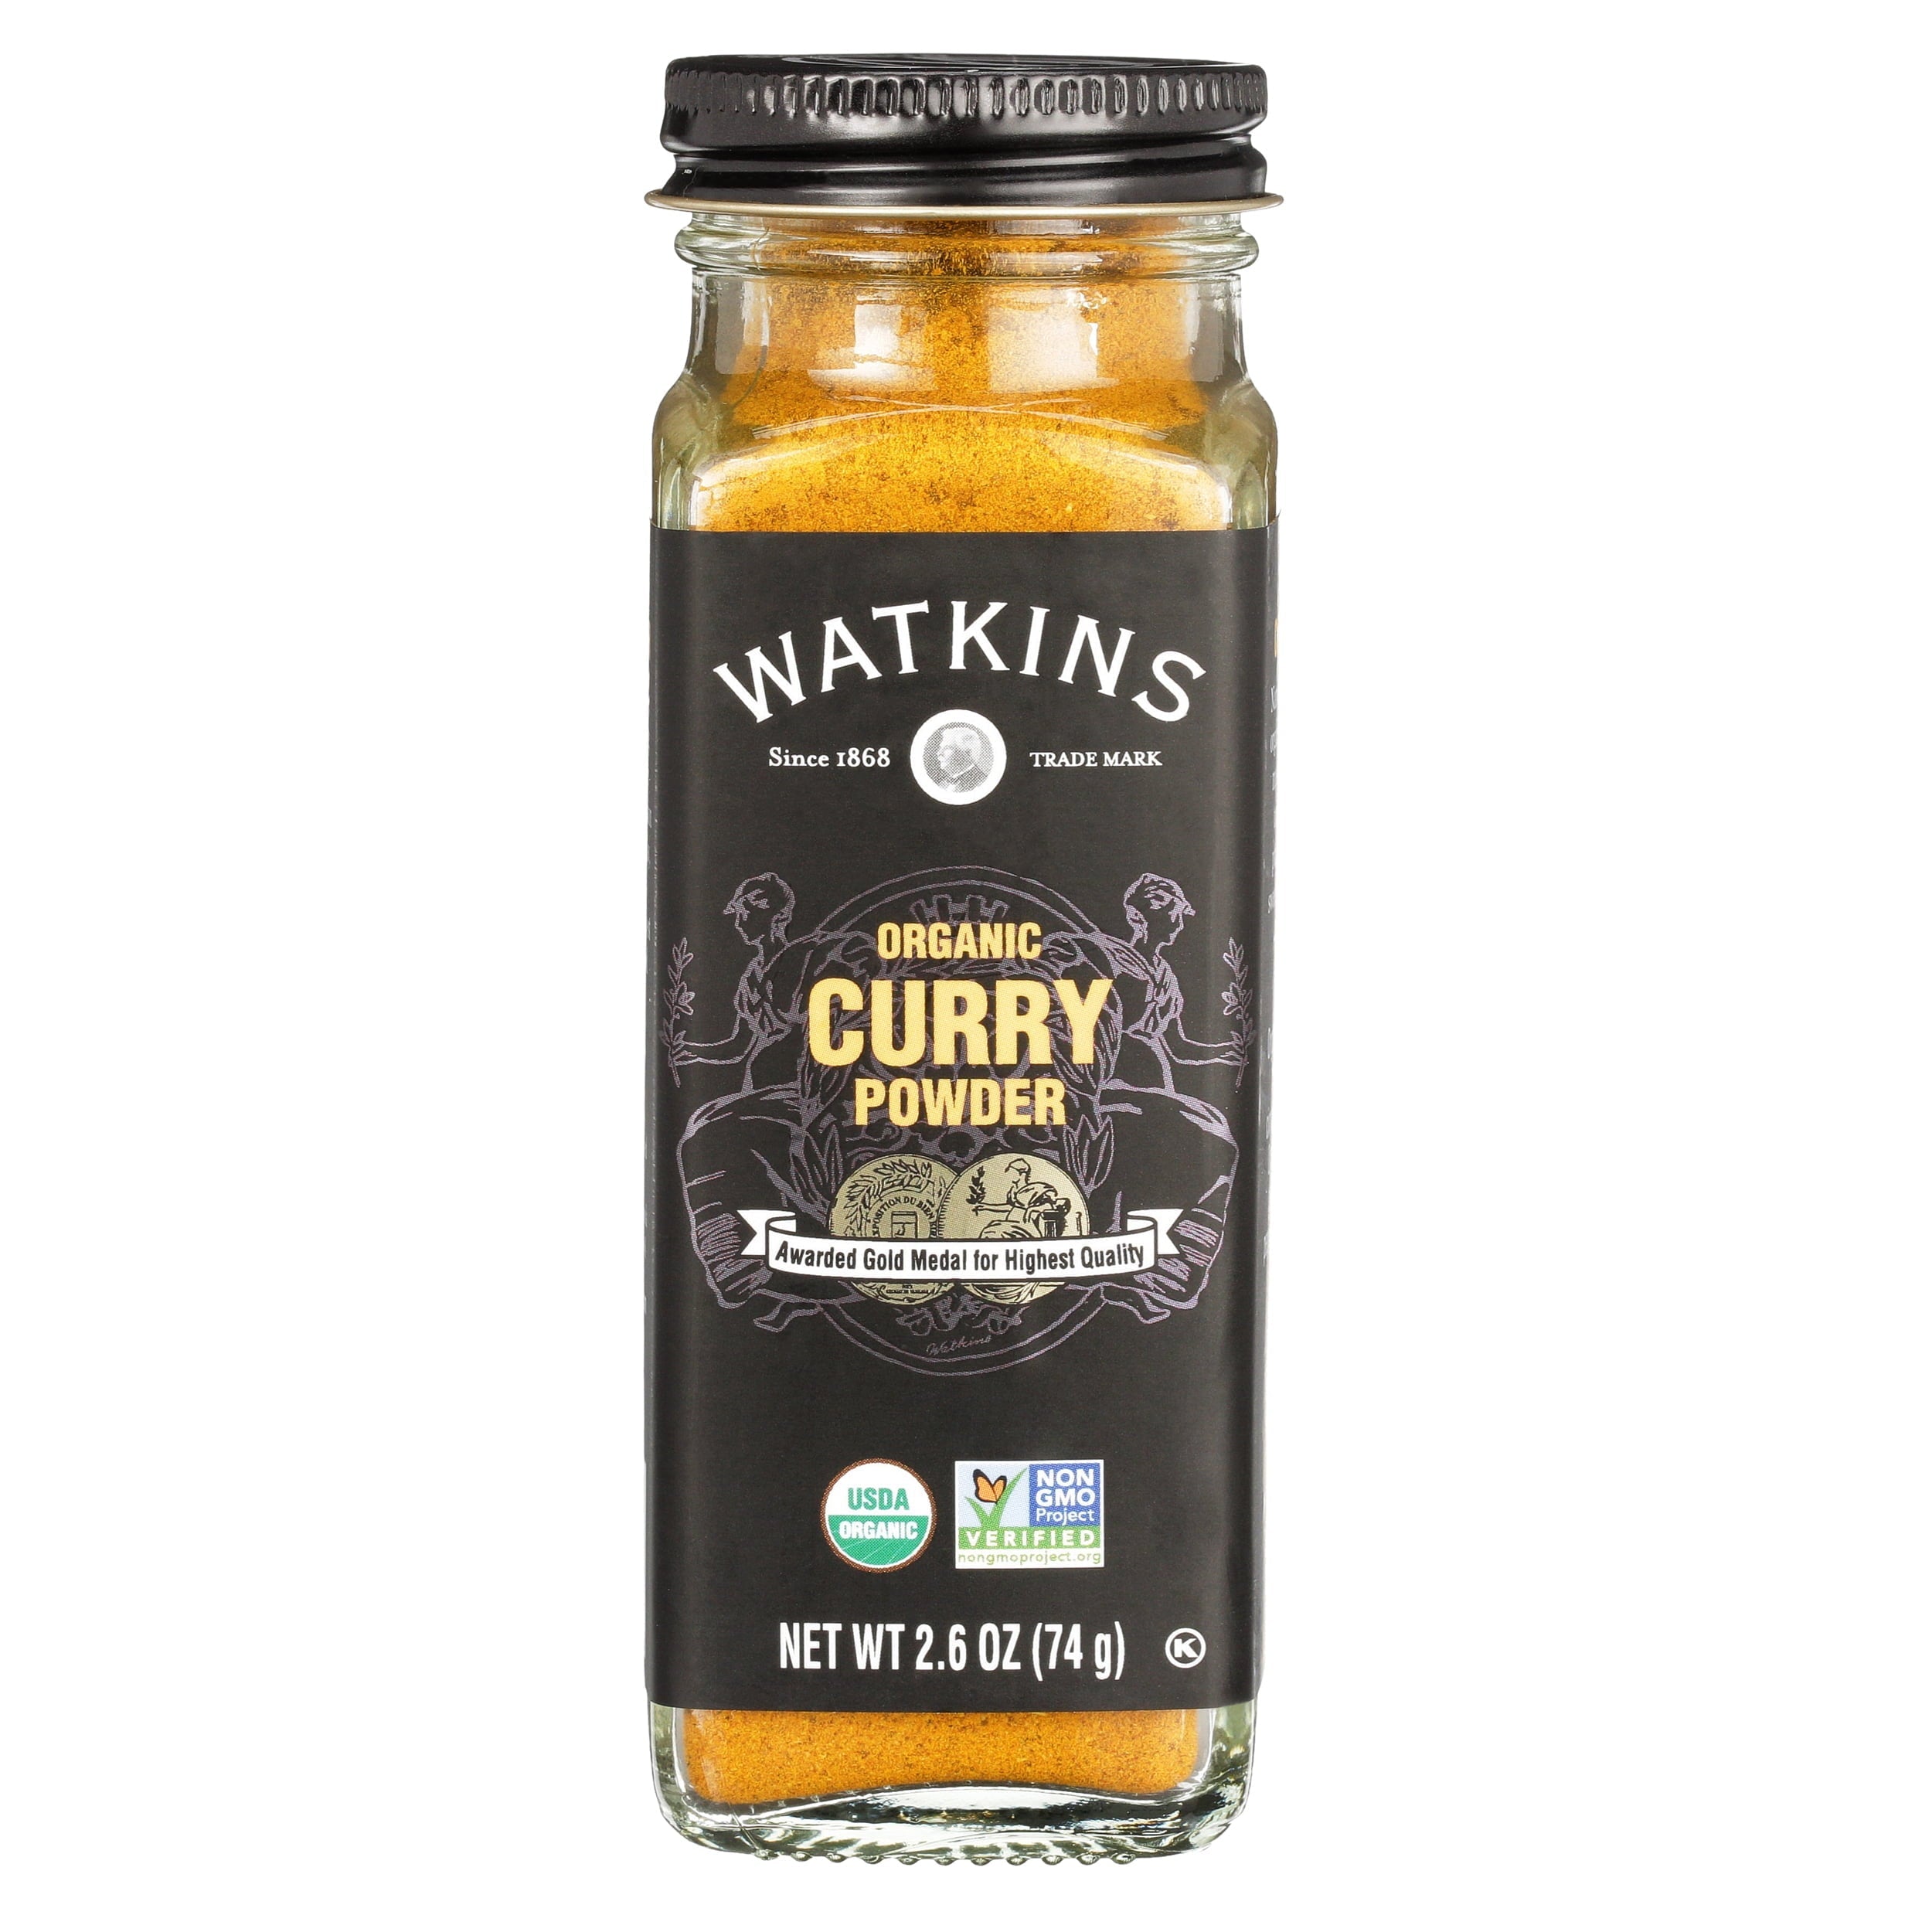 Watkins Gourmet Organic Spice Curry Powder 2.6 oz